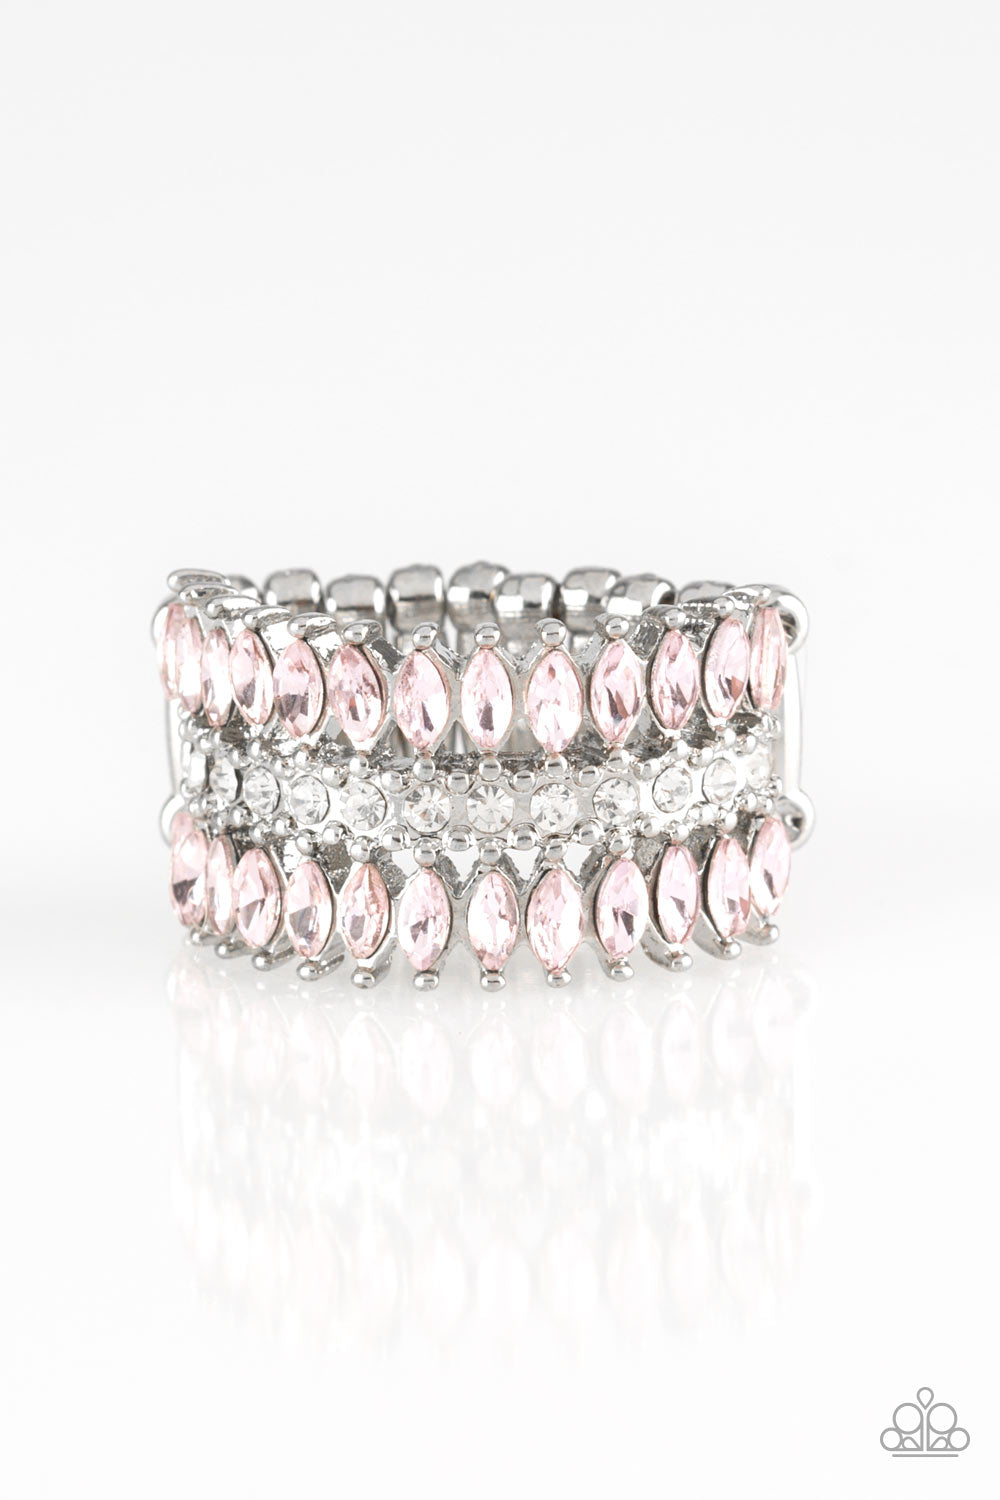 Paparazzi Treasury Fund - Pink Rhinestones  - Silver Ring - $5 Jewelry with Ashley Swint